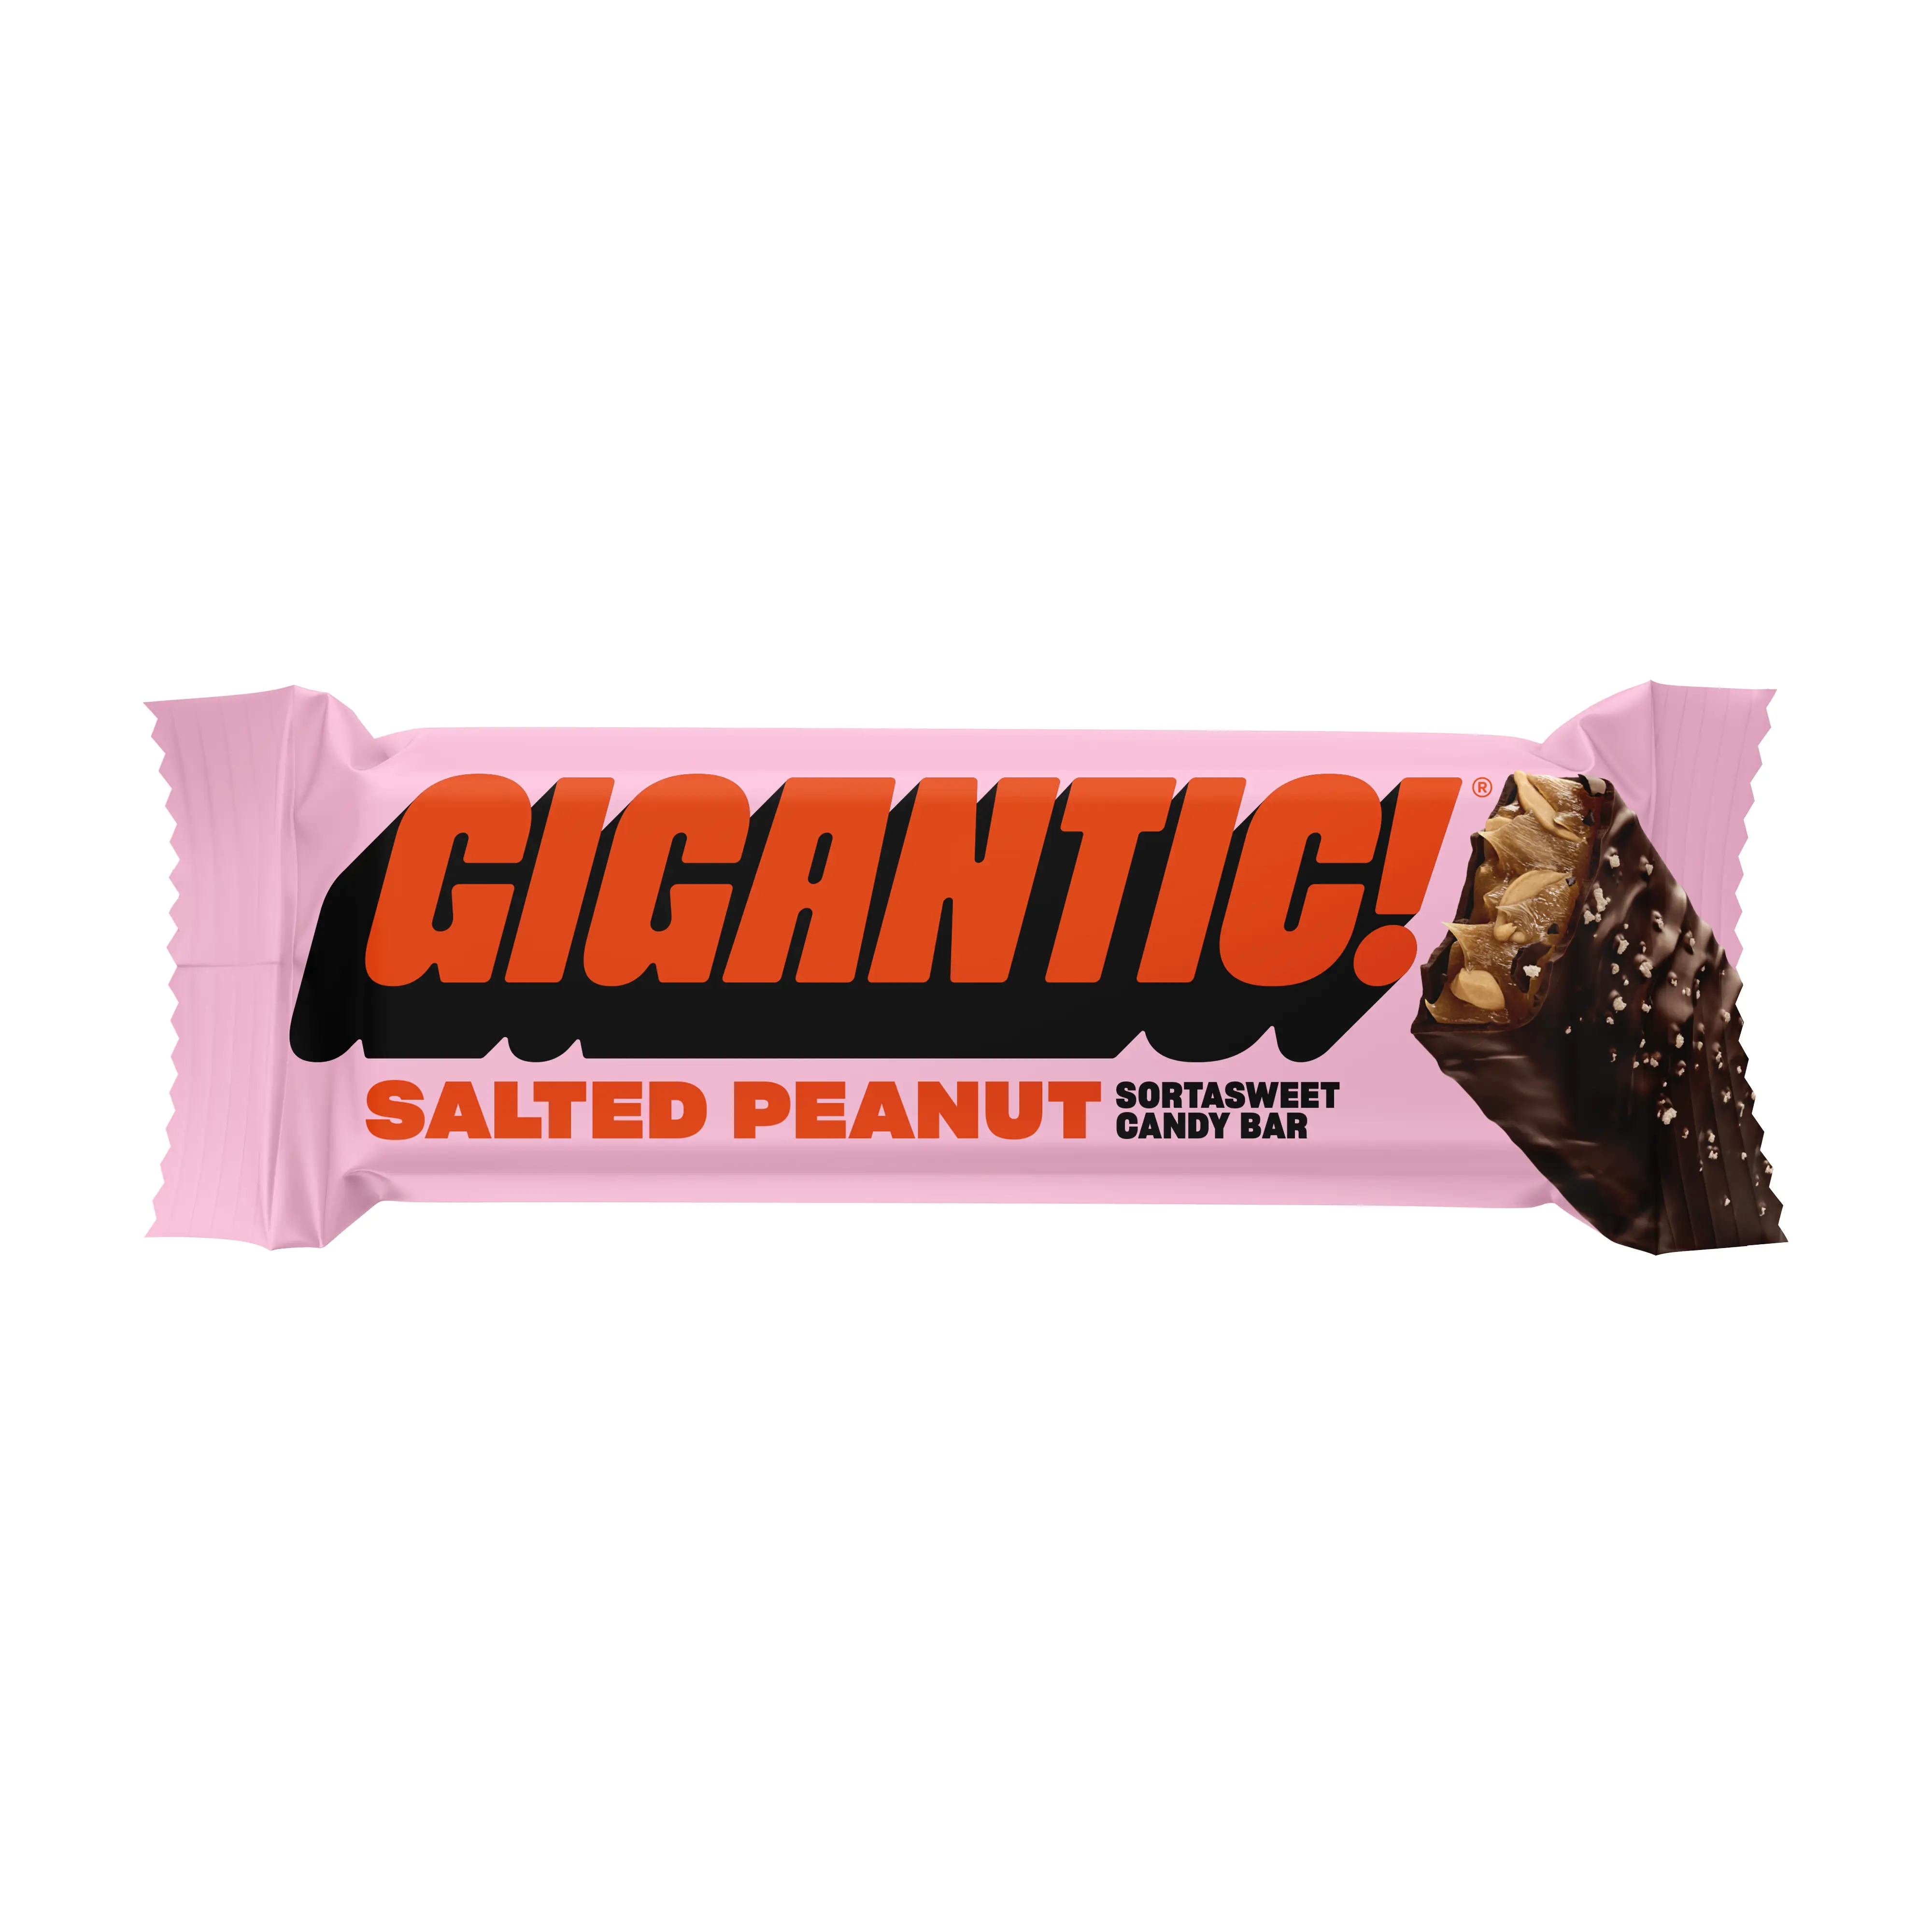 Salted Peanut Sortasweet Candy Bar